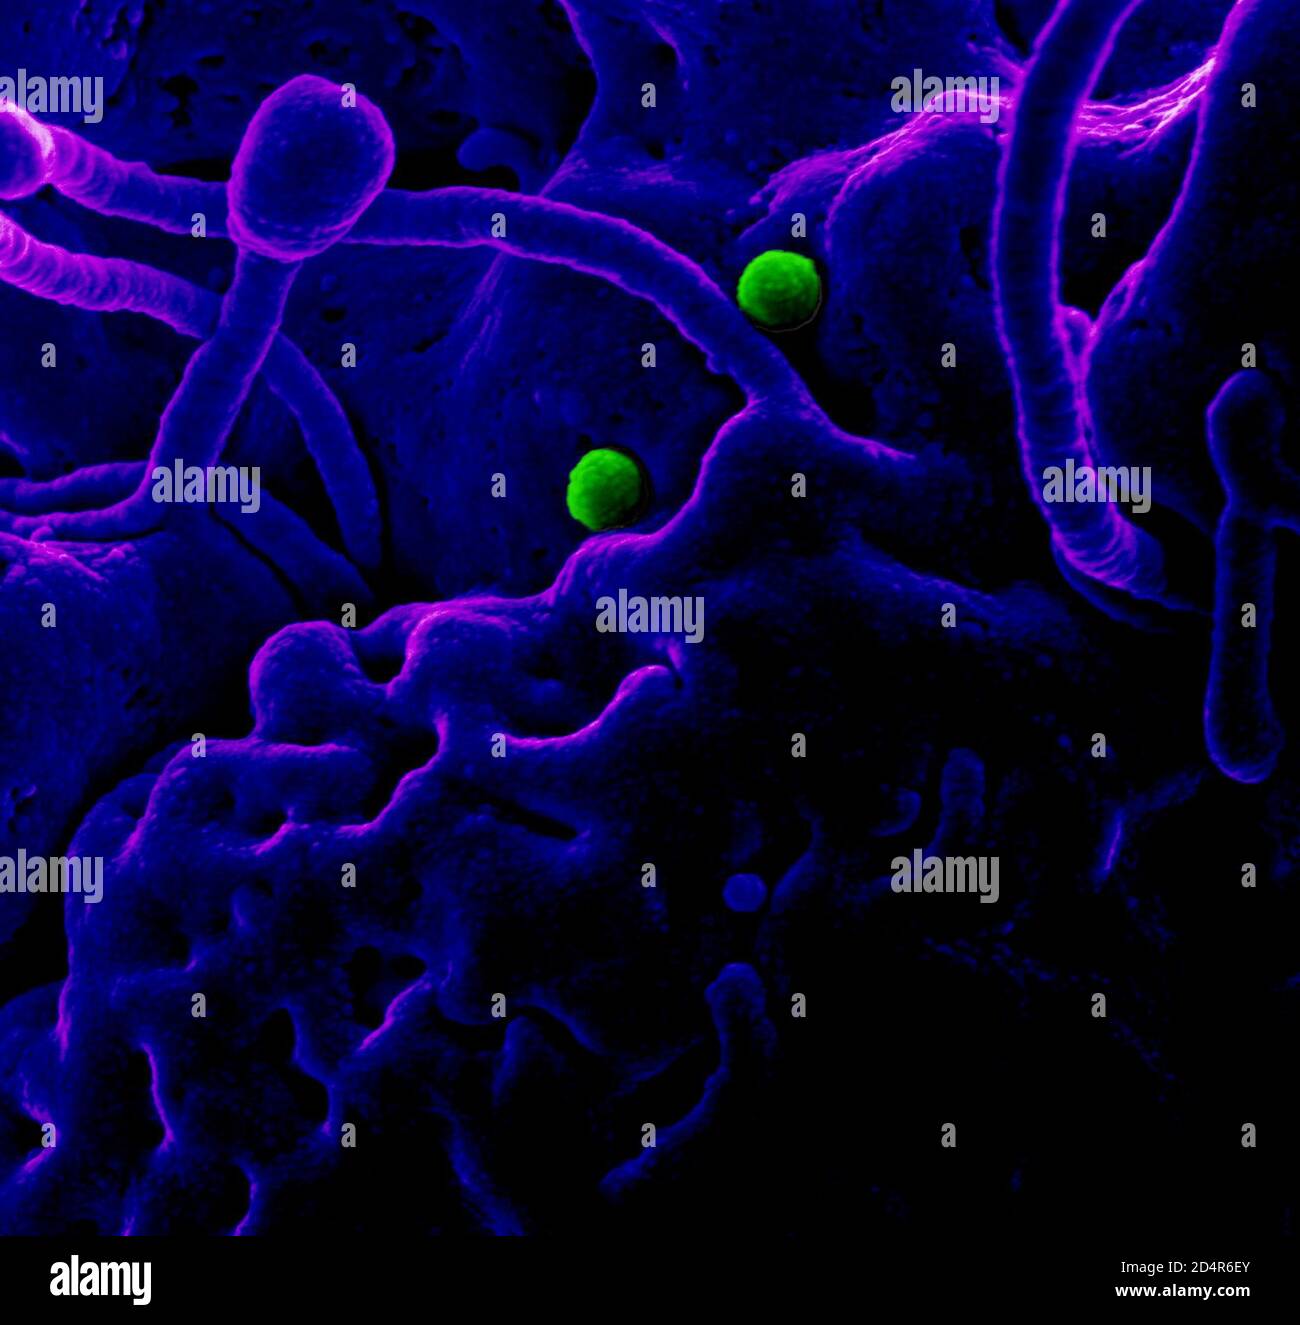 Particelle DI MERS-COV su cellule epiteliali di cammello ; particules MERS-COV sur des cellules épithéliales de chameau Foto Stock